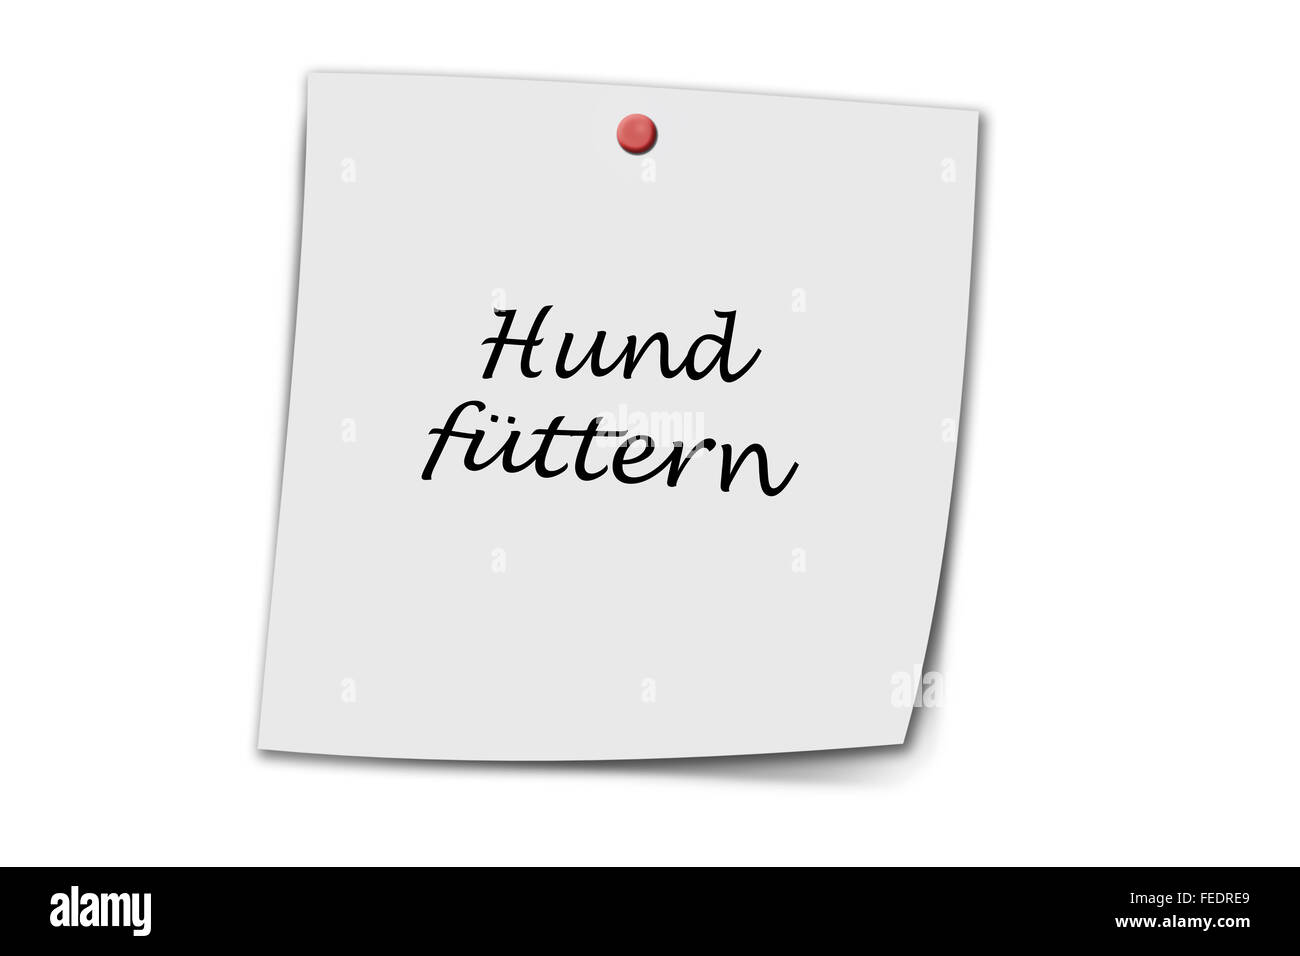 Hund füttern (German feed dog) written on a memo isolated on white Stock Photo